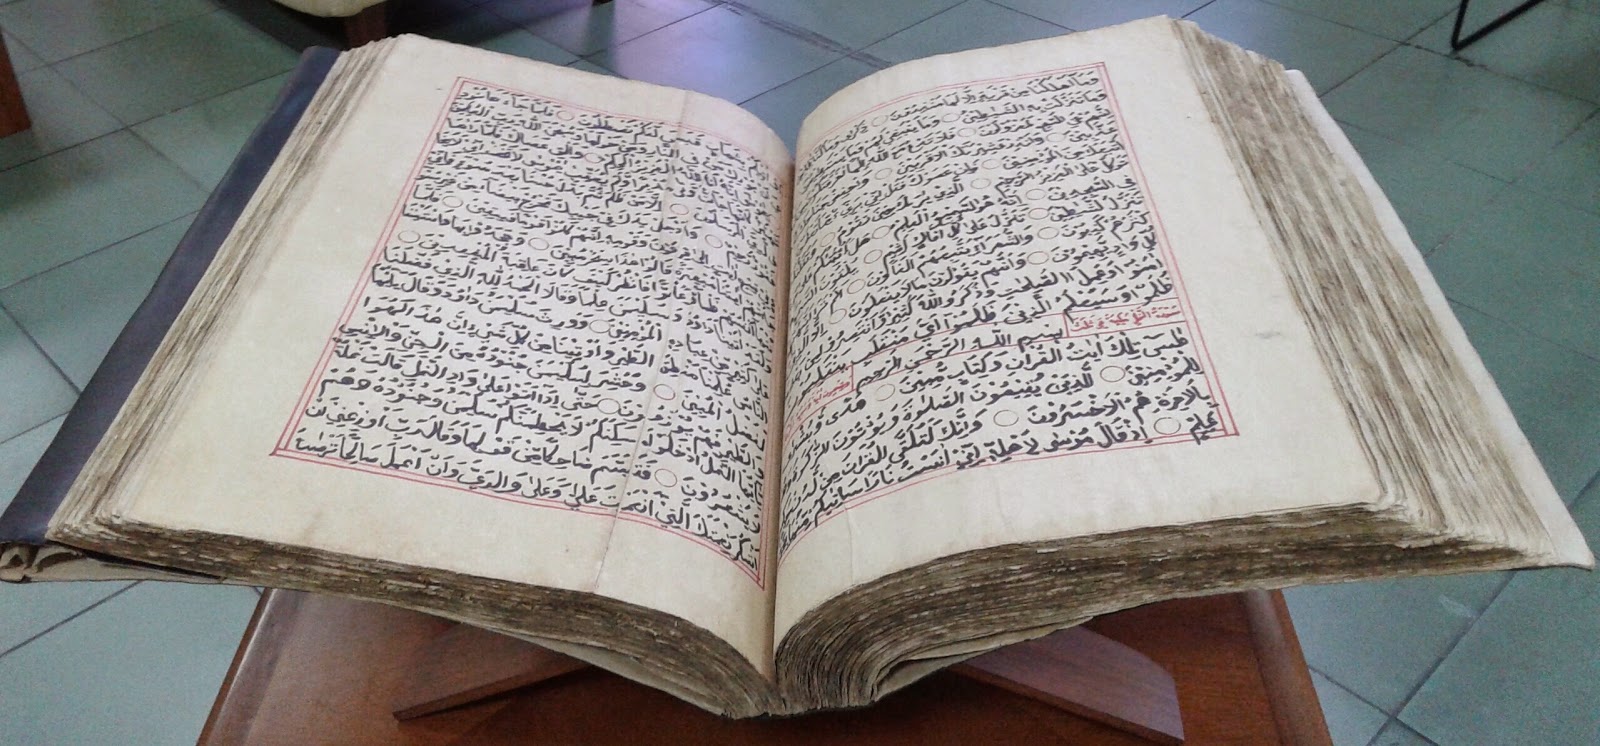 Мусульманский сонник собака. 2 153 Коран. 74-42-43 Коран. Коран мишпар беиш эшиги. Найден Коран на куске кожи в Турции.